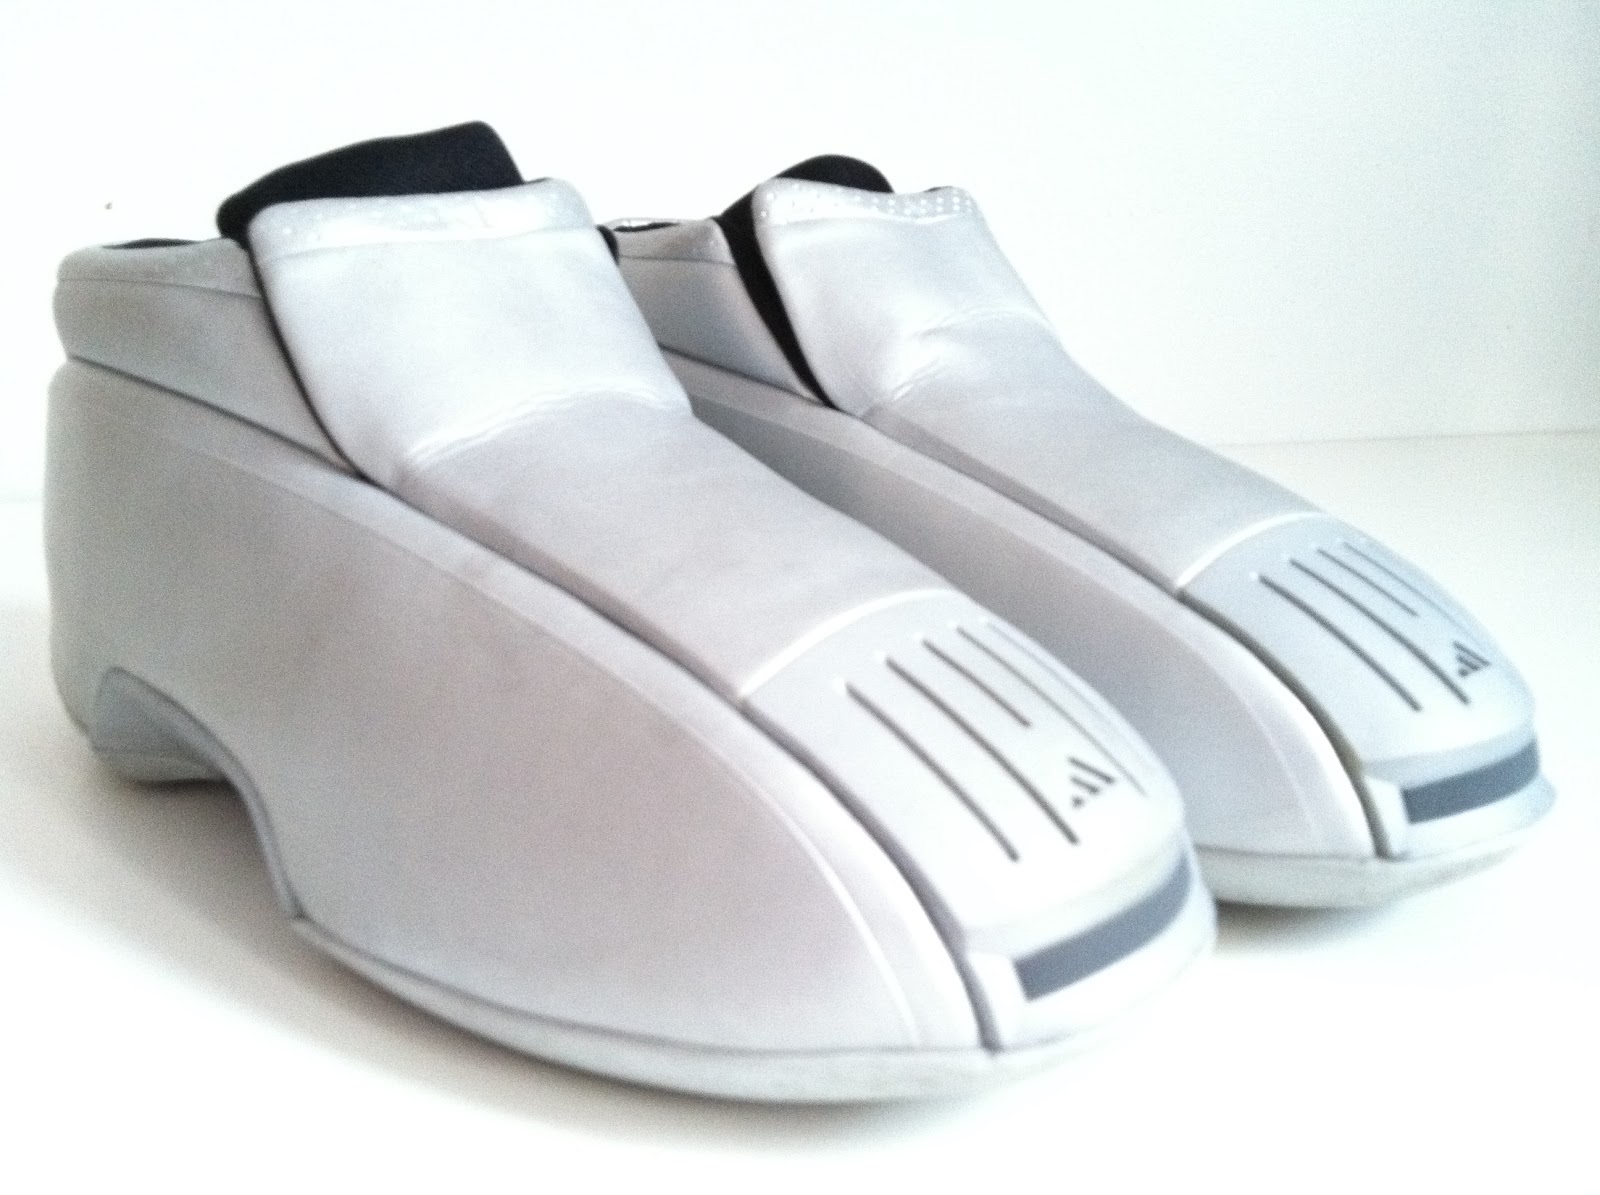 kobe bryant space shoes